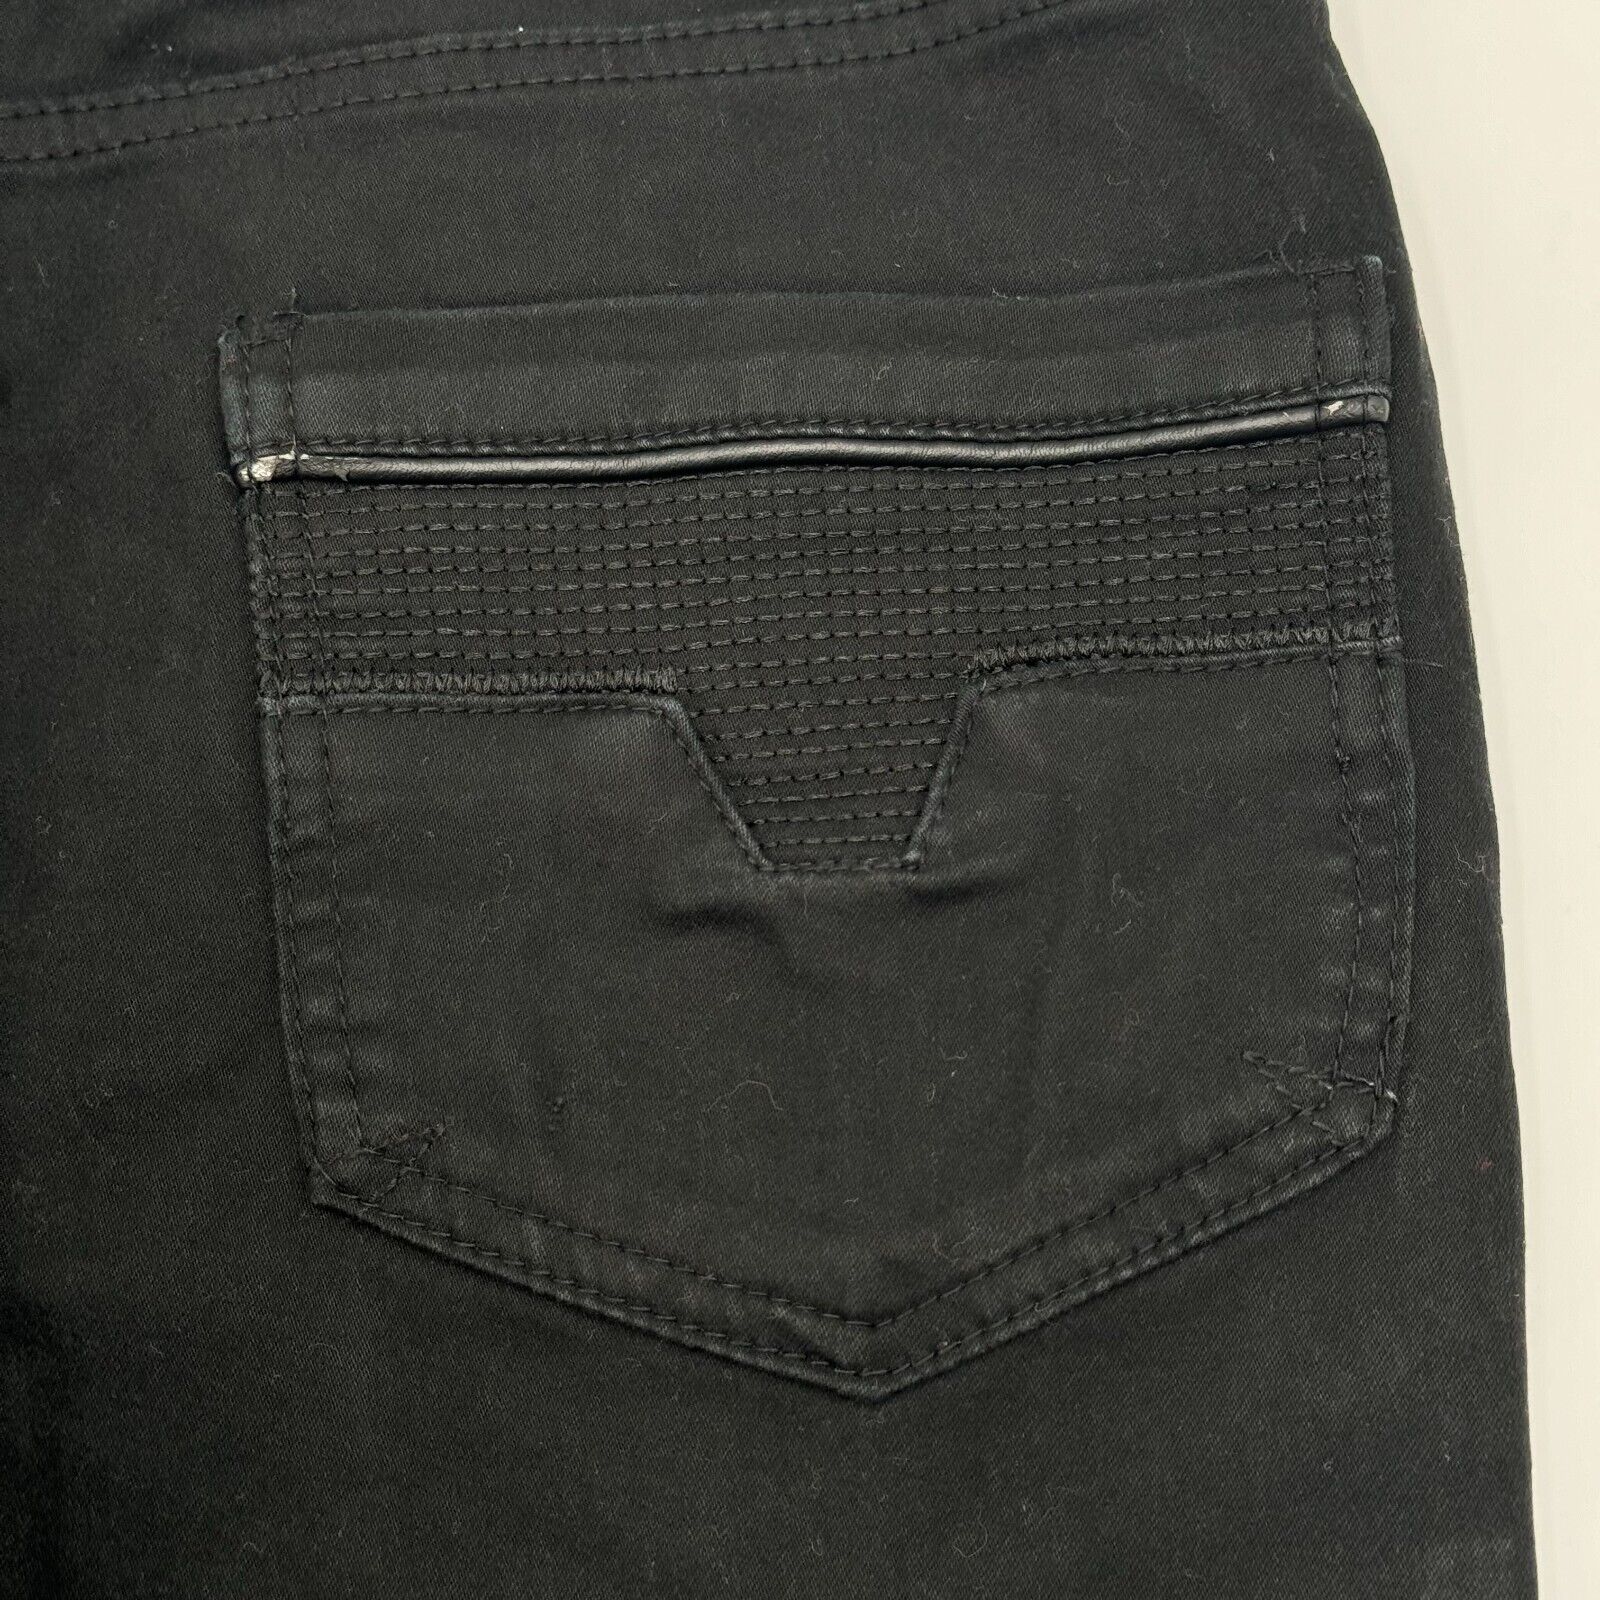 Fried Denim Black Slim Fit Streth Jeans Reinforced Knees Mens Size 34x30